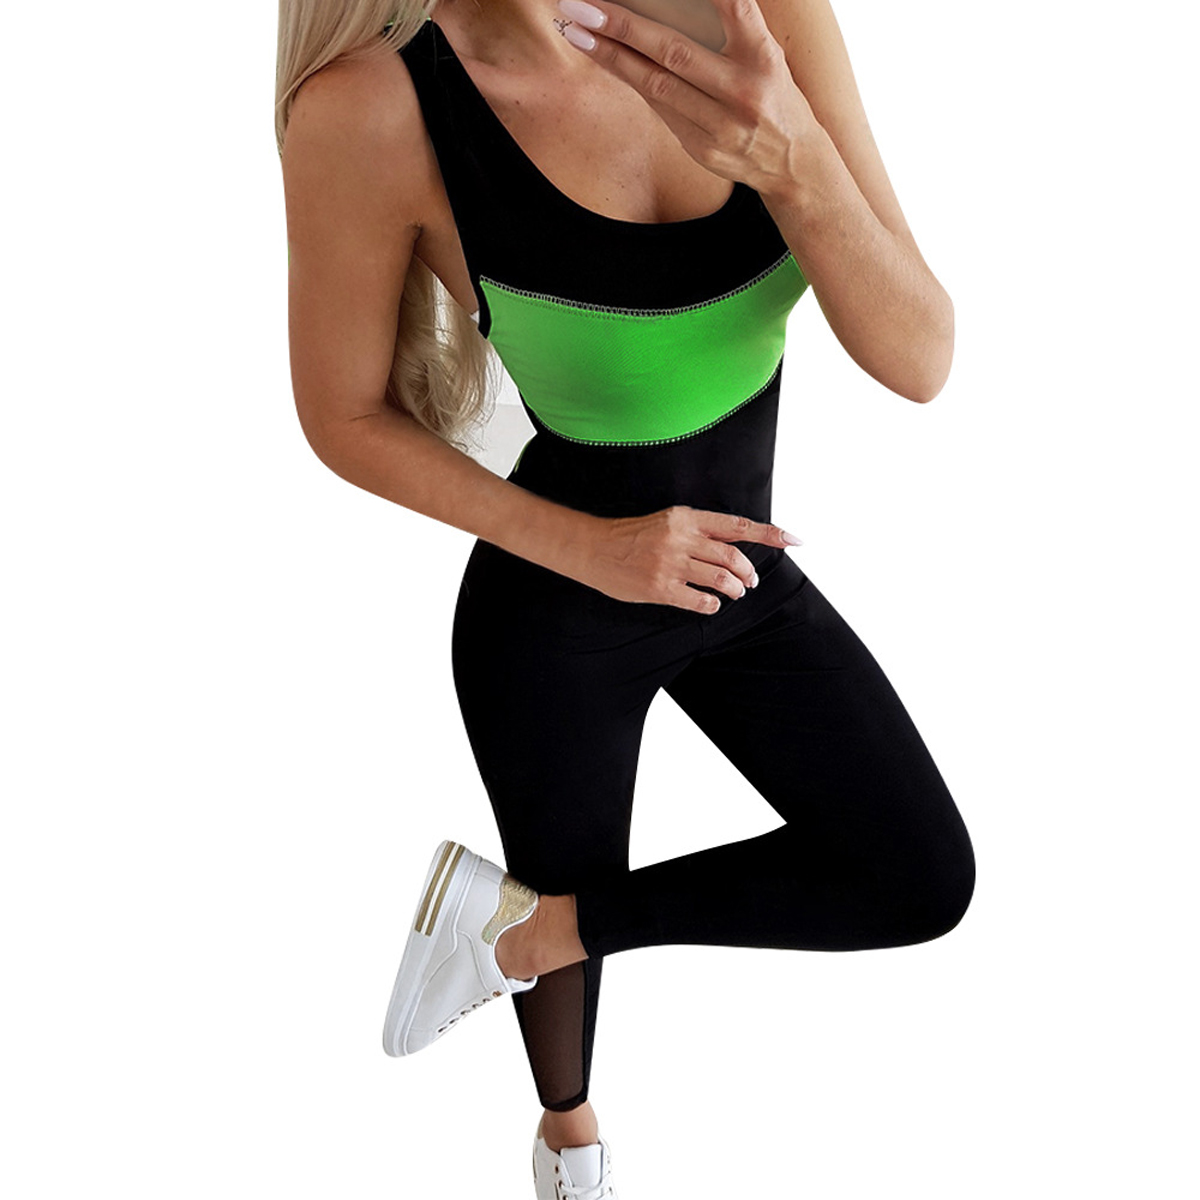 New Women Yoga Jumpsuit Summer Sleeveless Sports Yoga Training Skinny Sheath Lady Backless Fitness Stretch Exercise Wear 2020